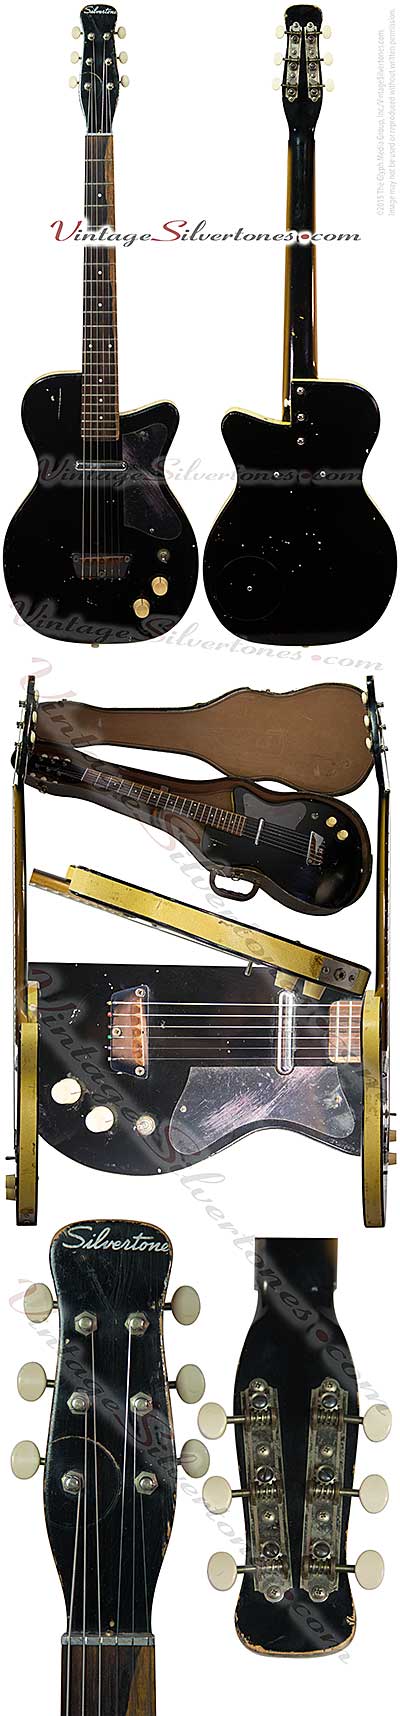 Silvertone-Danelectro U1/1317 - single pickup black electric guitar 1957